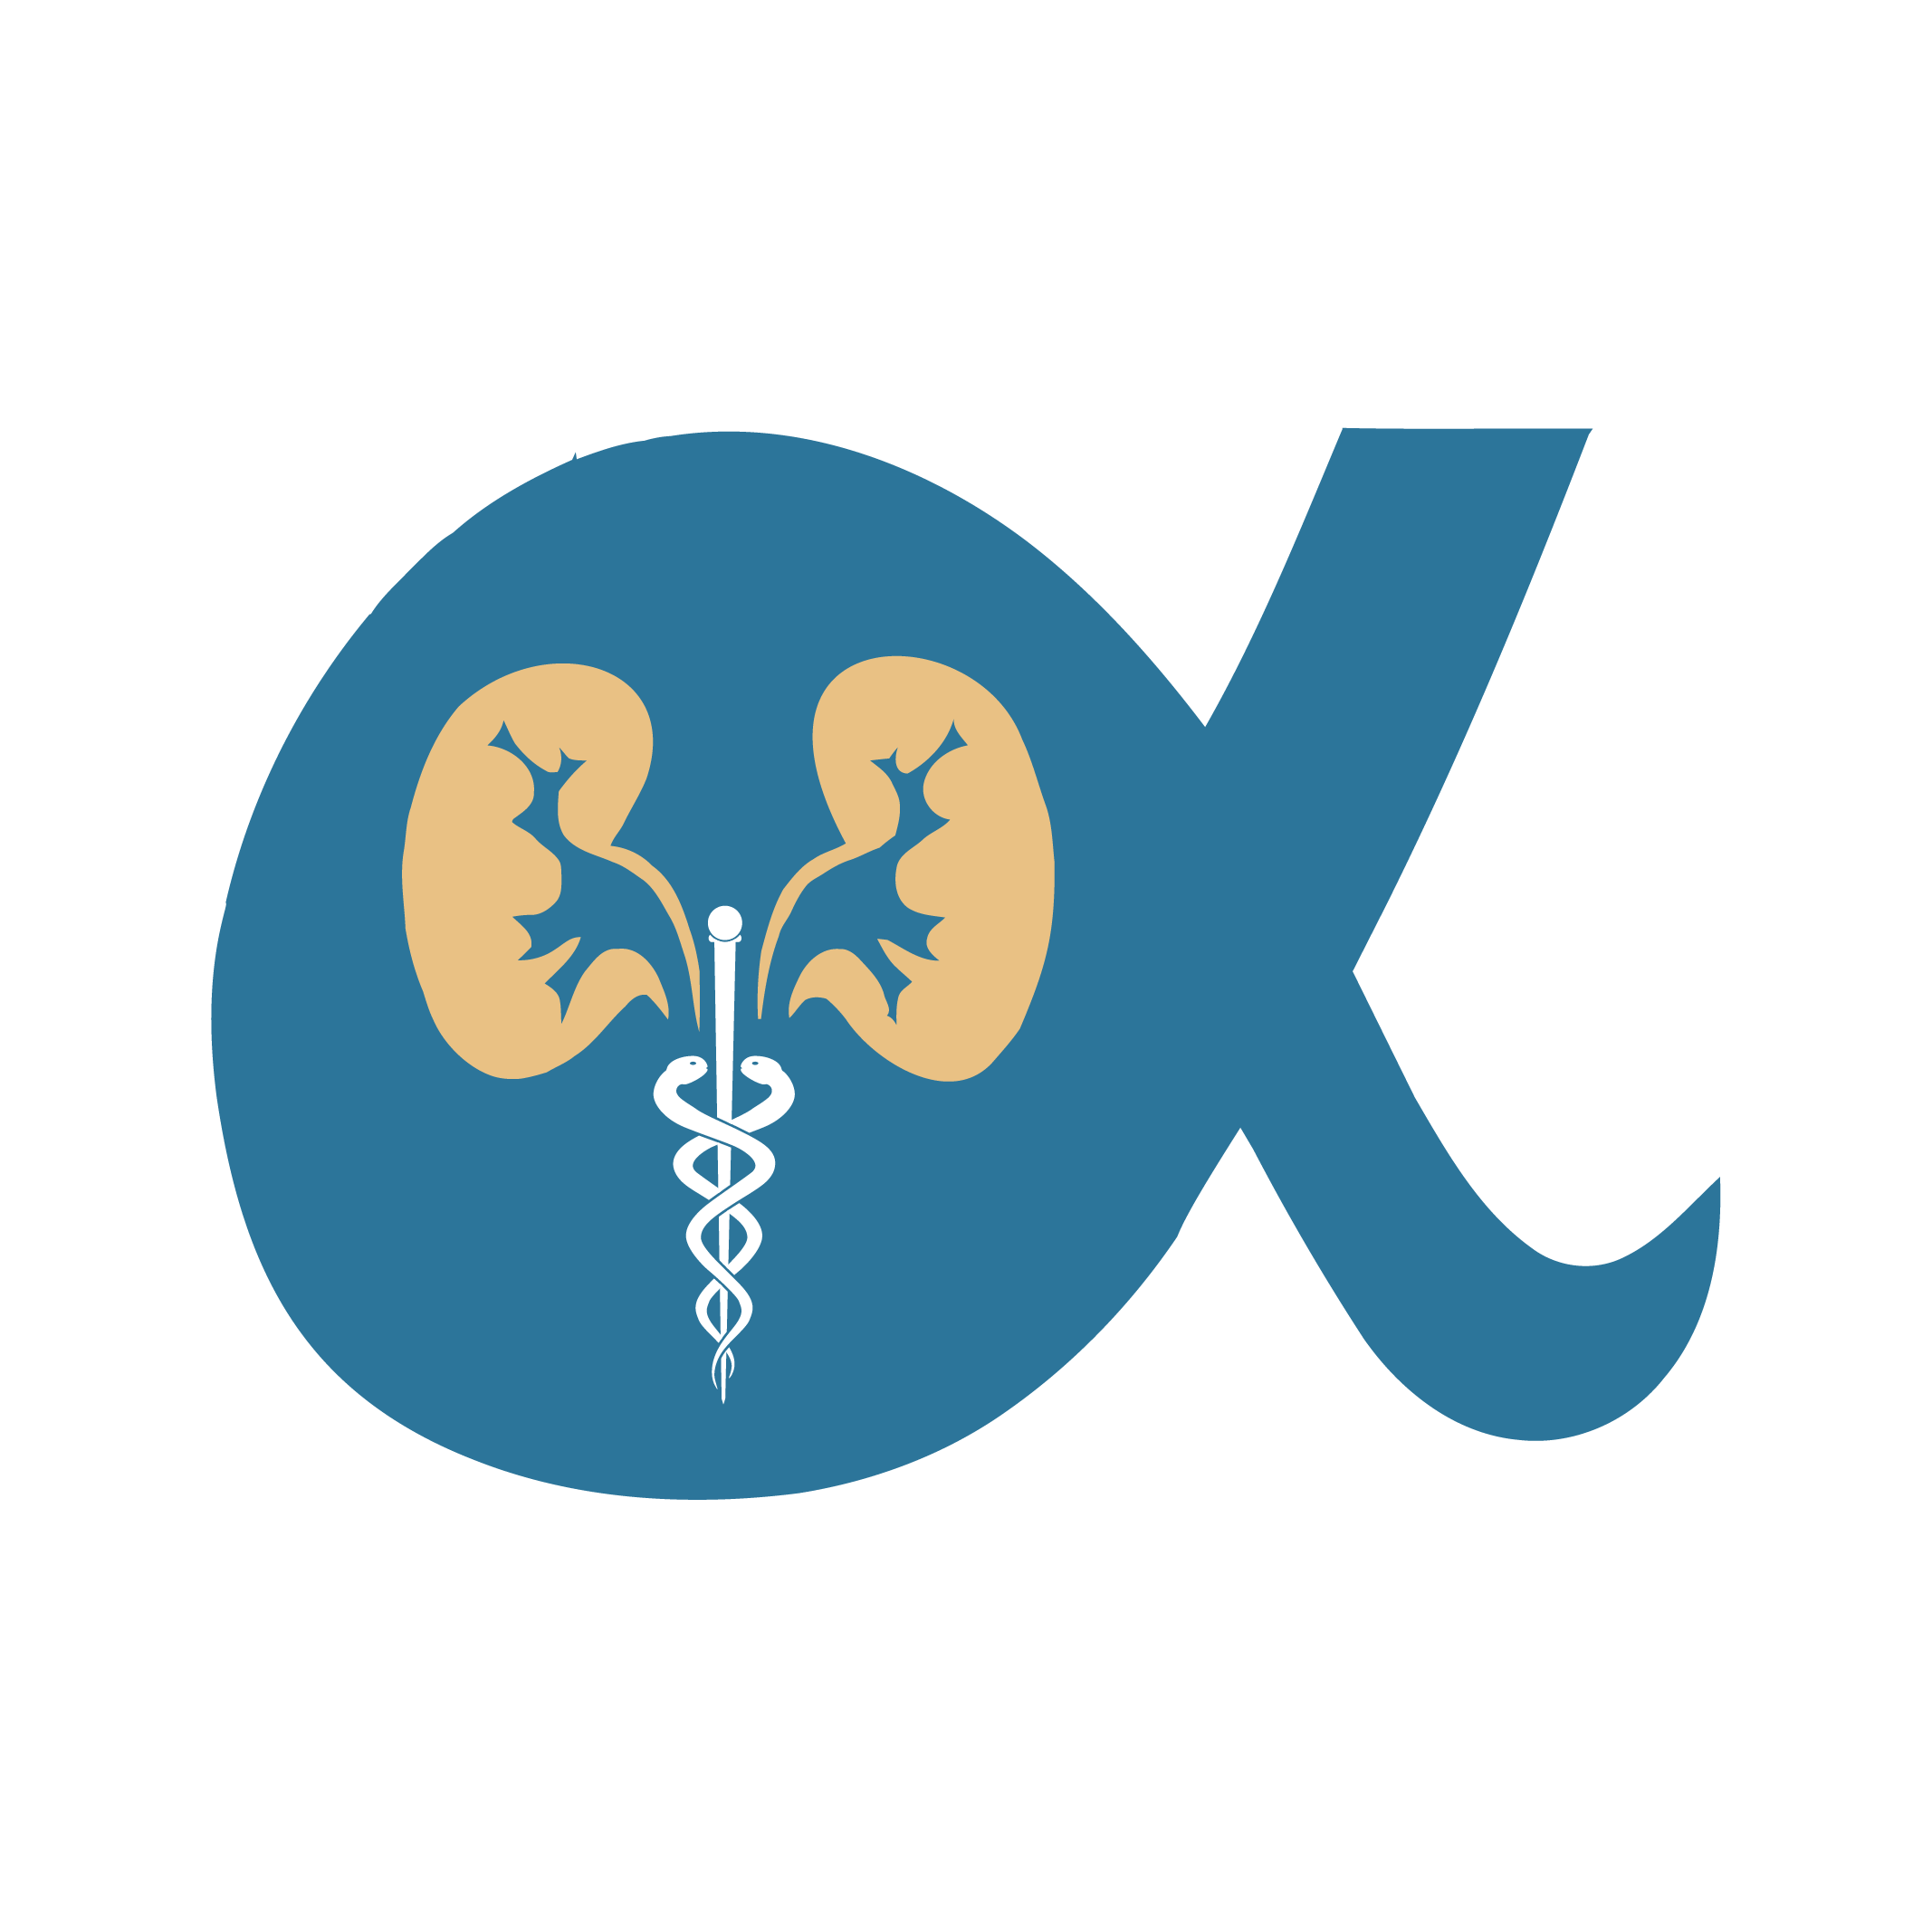 Alfa Kidney Care|Clinics|Medical Services